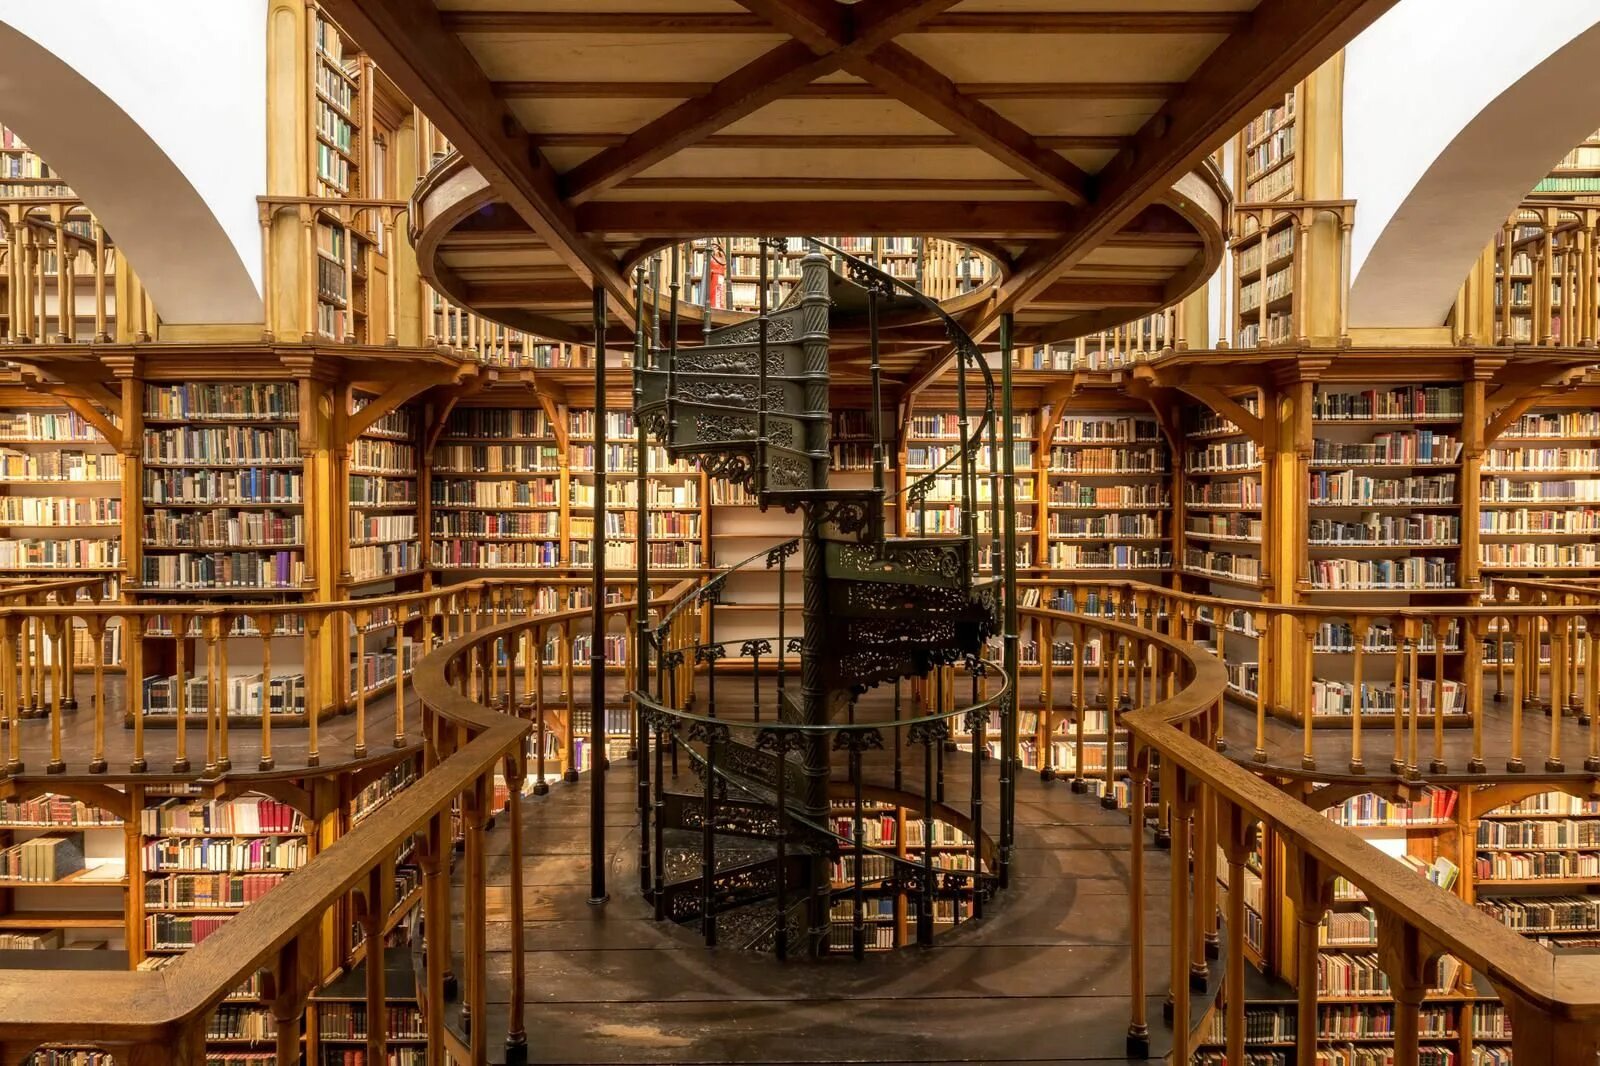 Platform library. Библиотека науки, Герлиц, Германия. Maria Laach Abbey Library. Библиотека Джироламини Италия.